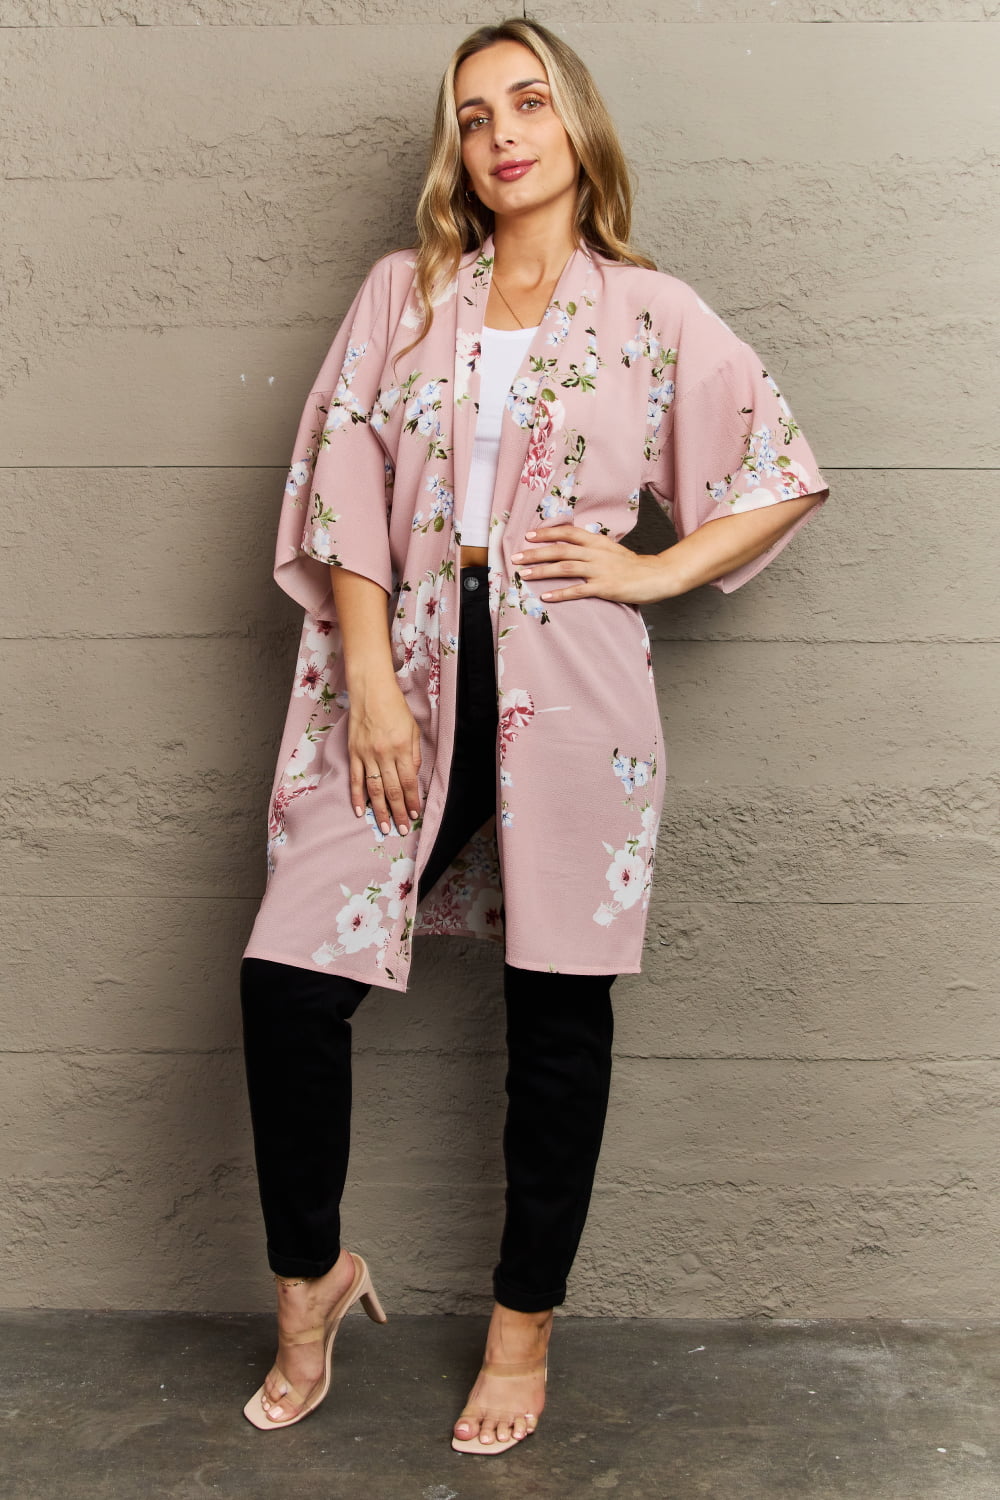 Floral Kimono in Blush PinkKimonoJustin Taylor